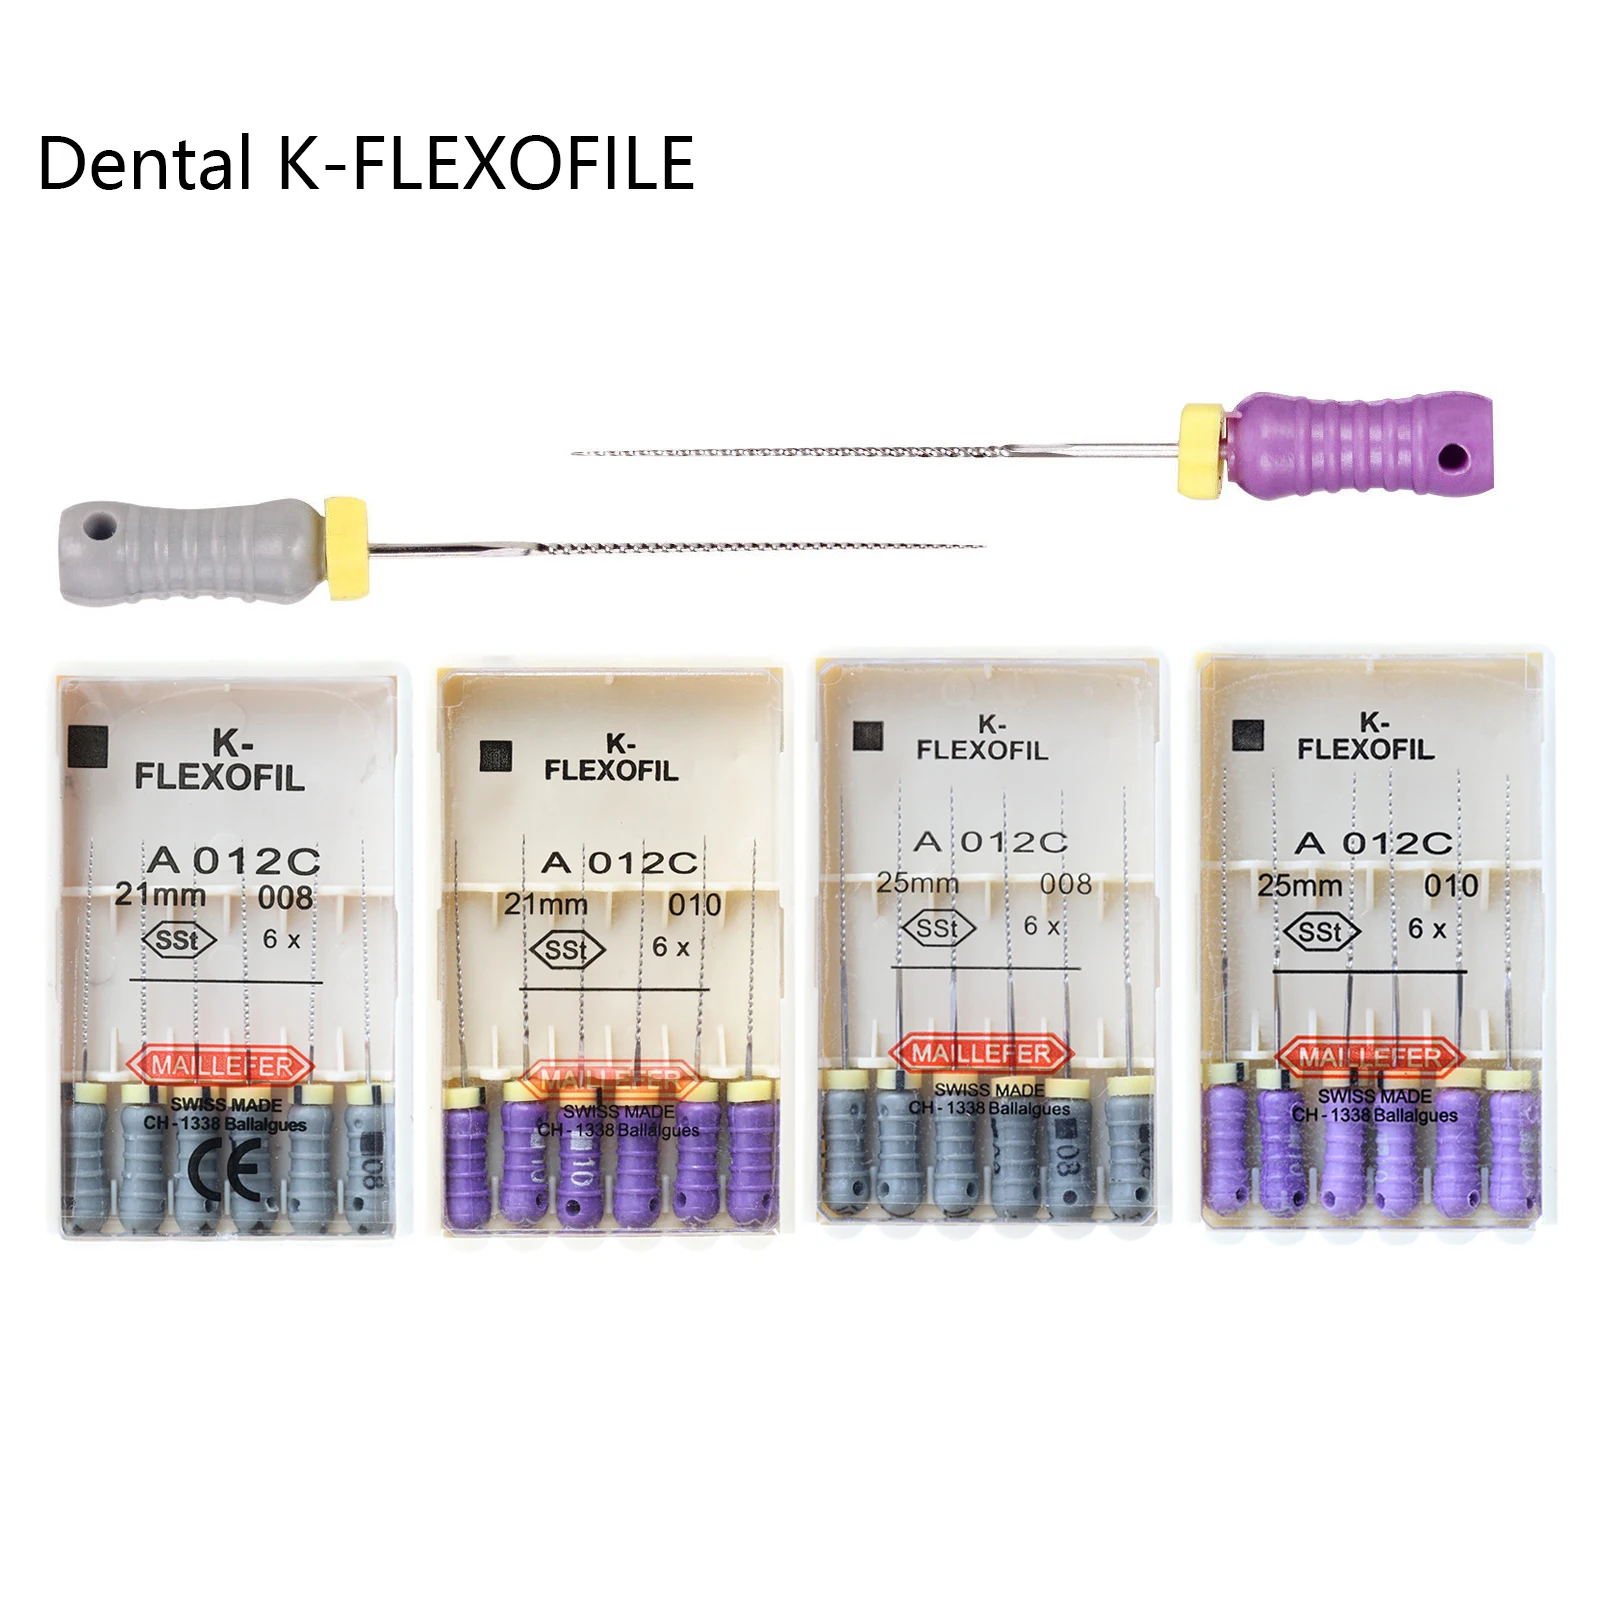 30 Pcs Dental K-FLEXOFILE Files Stainless Stee Root Canal K Files Minimal Ledging Endodontics Dental Endo Files 21mm/25mm